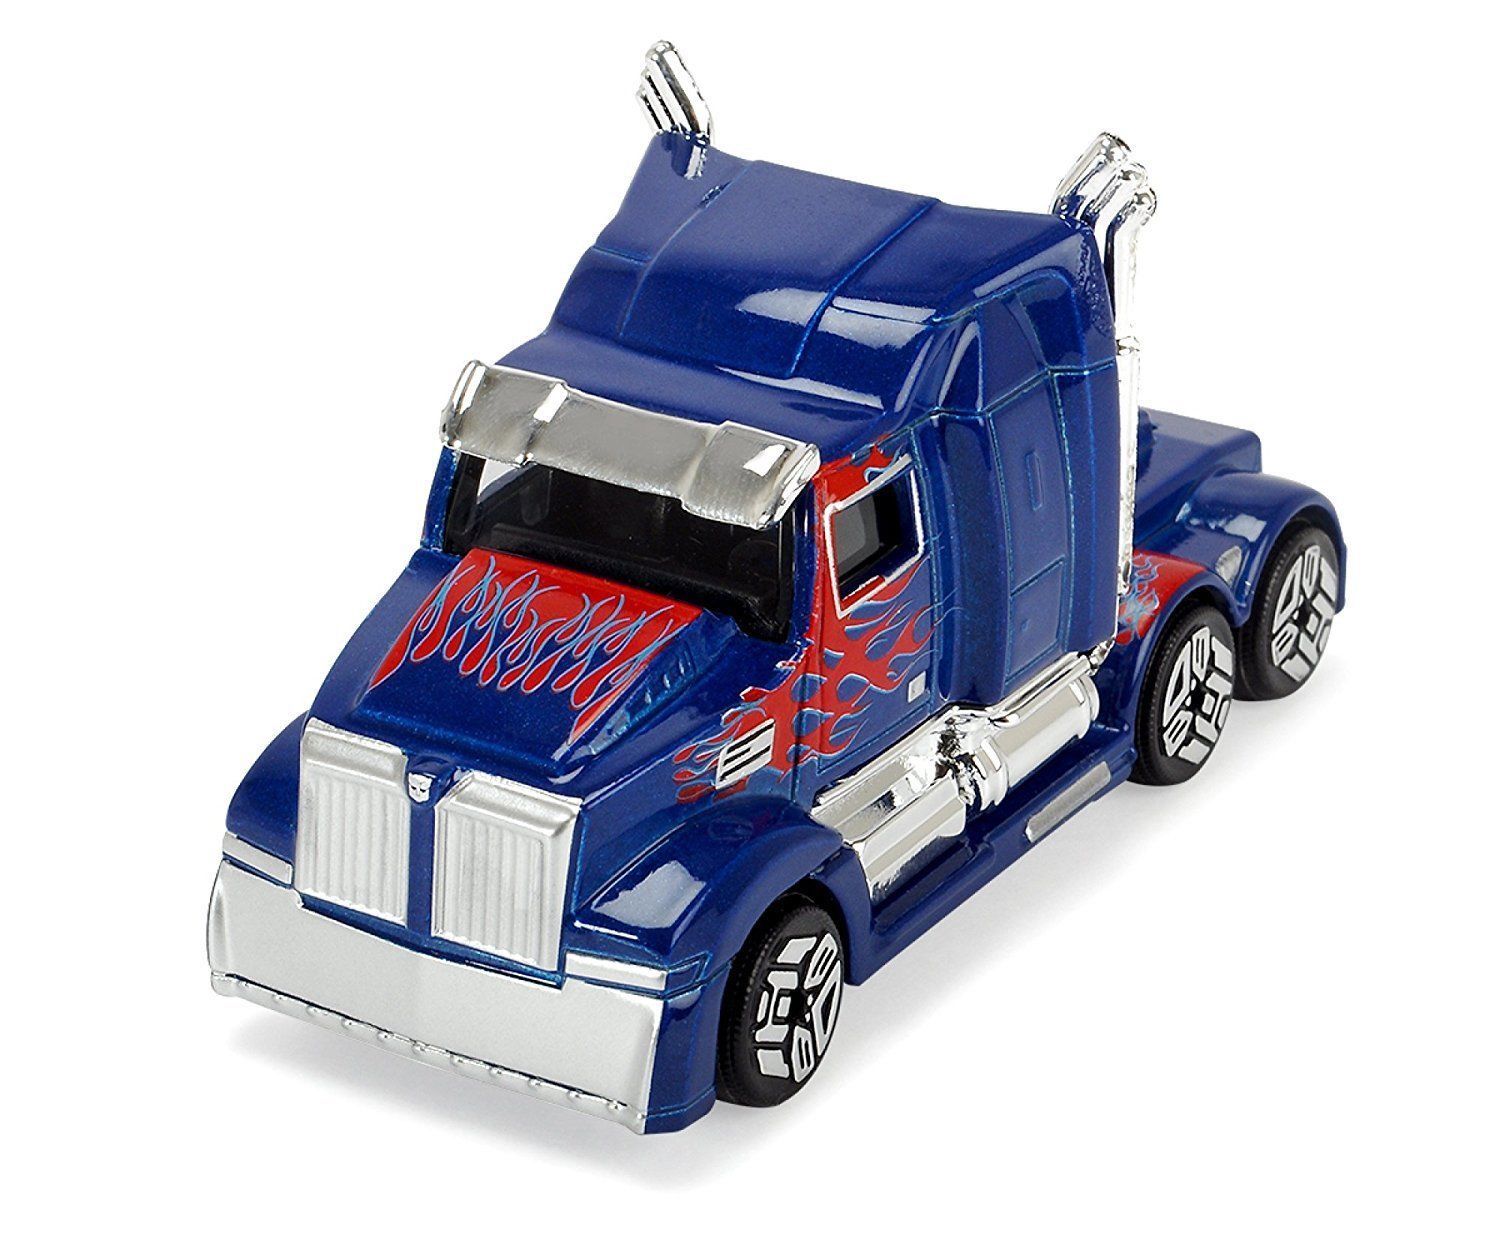 M transformer. Оптимус Прайм машинка. Оптимус Прайм модель грузовика. Трансформер Оптимус Прайм автомобиль. Optimus Prime Truck Toy.